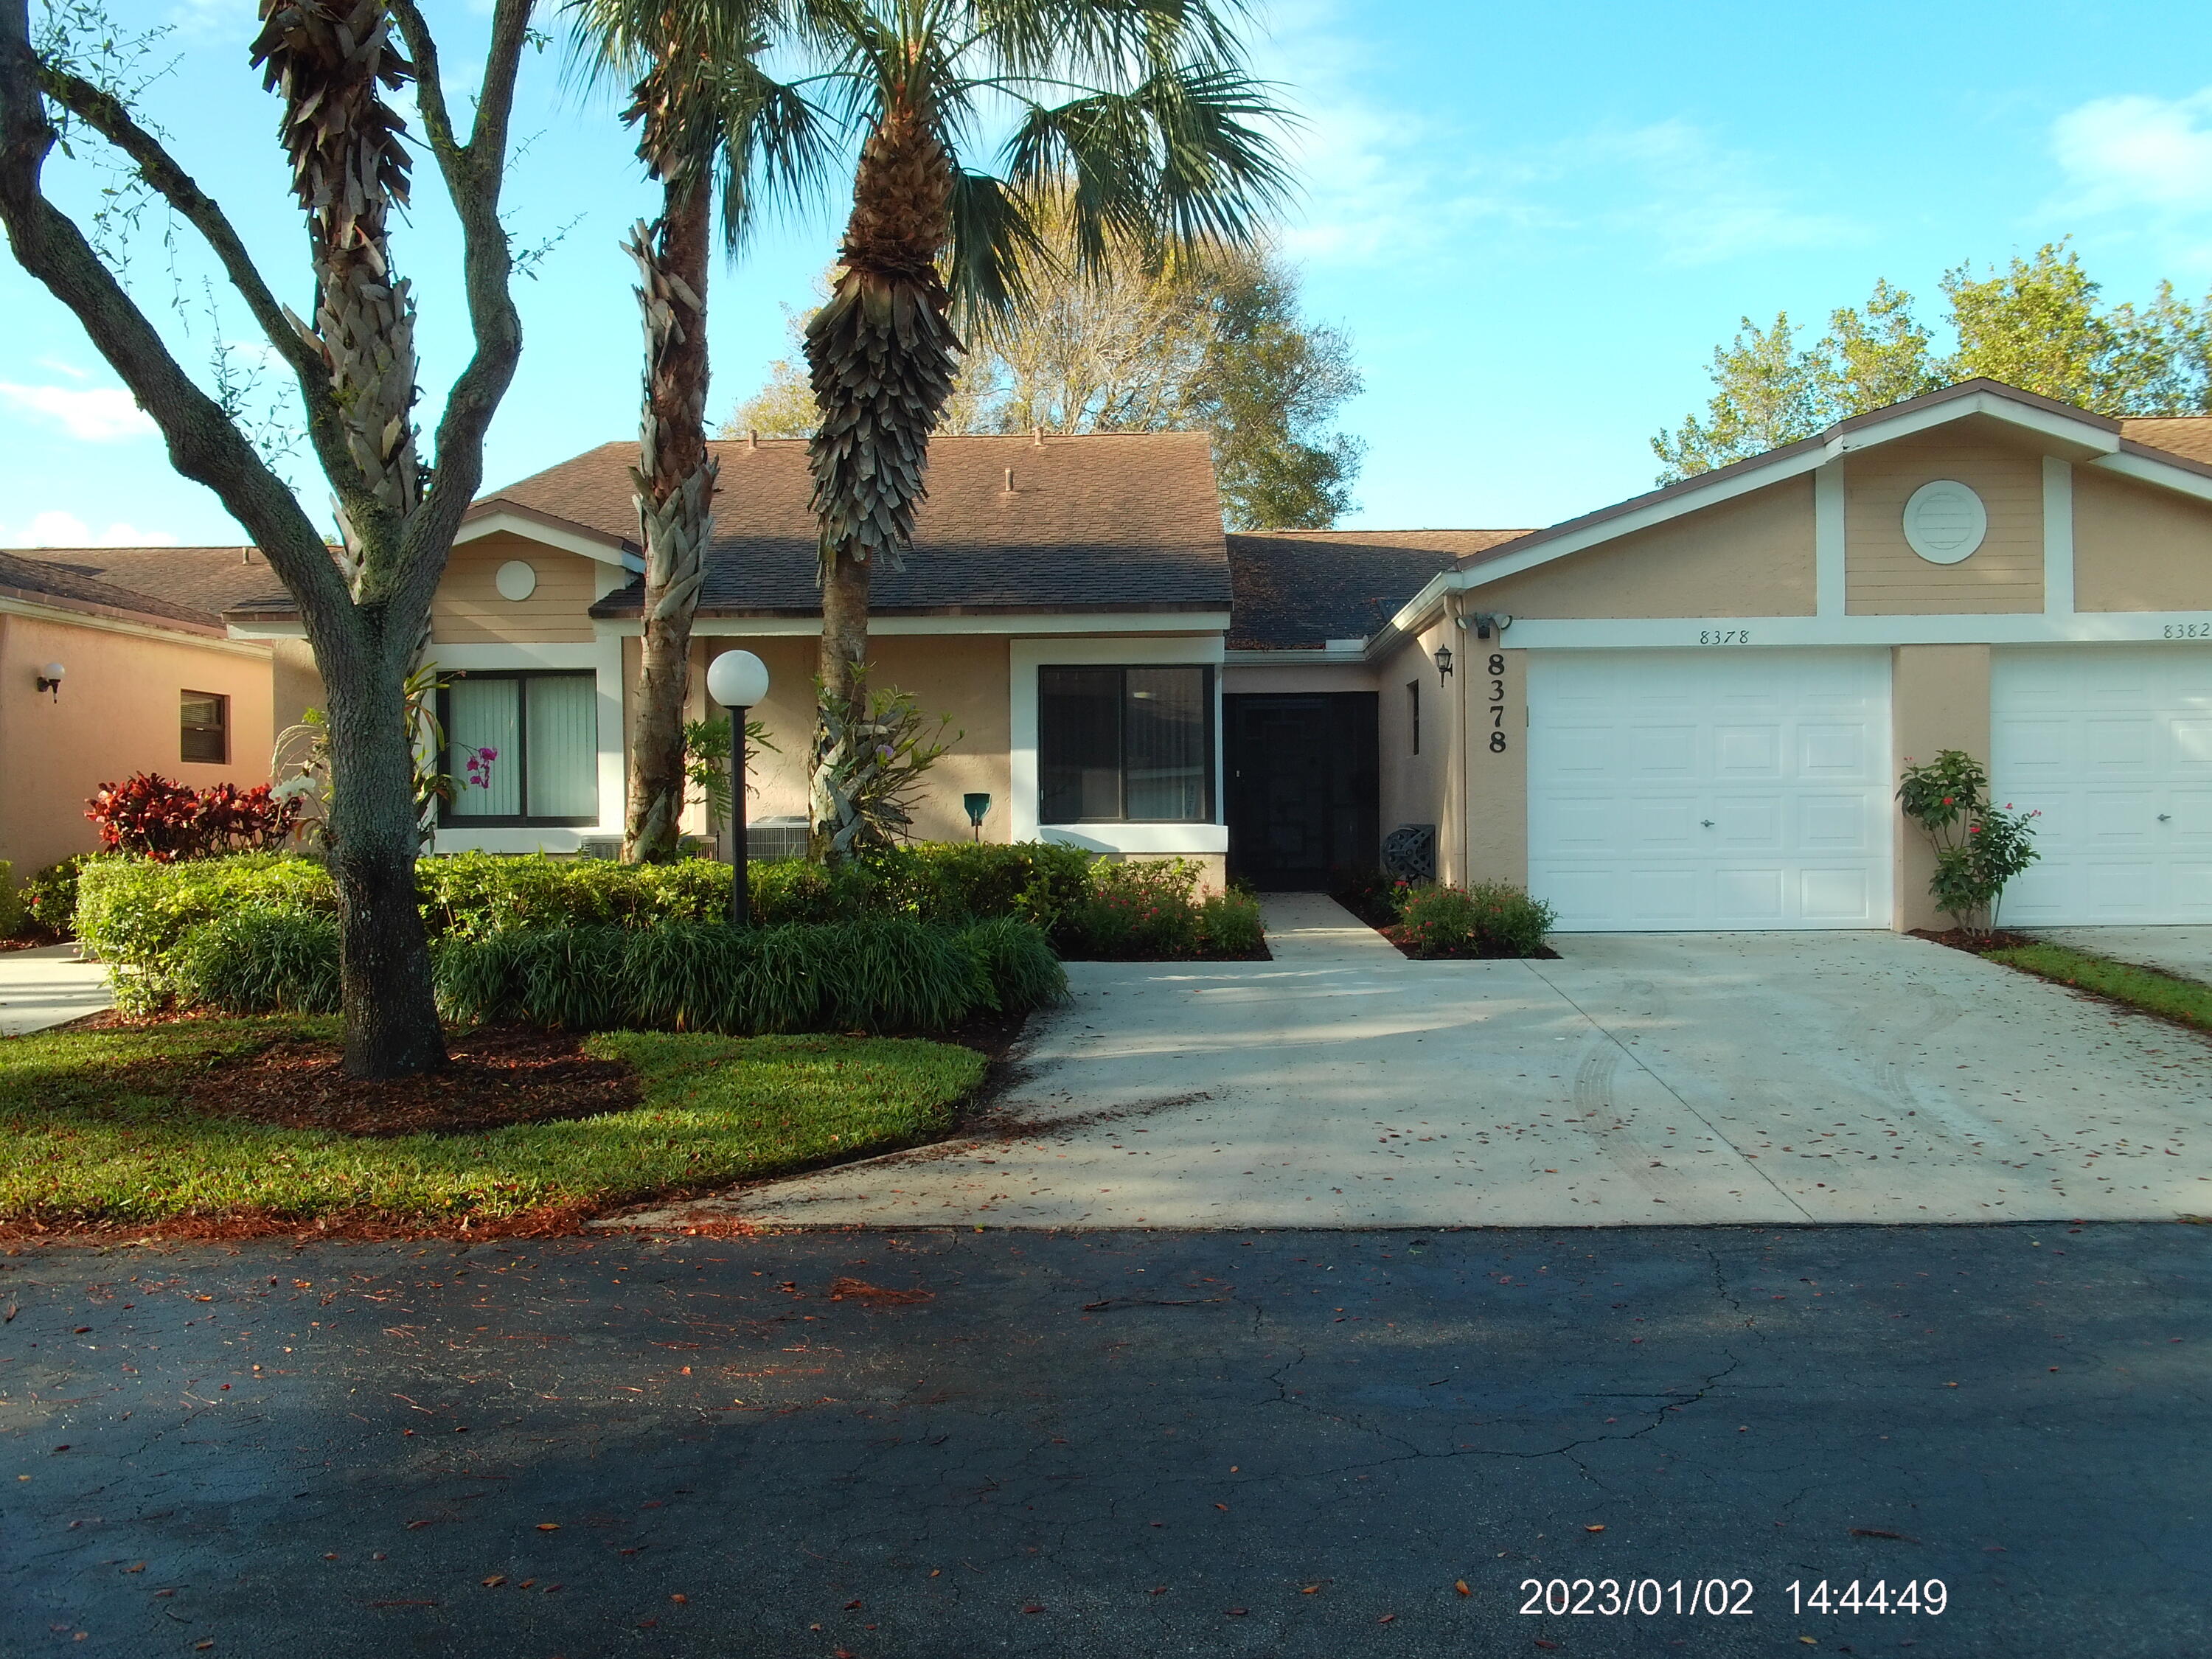 Property for Sale at 8378 Springlake Drive E, Boca Raton, Palm Beach County, Florida - Bedrooms: 2 
Bathrooms: 2  - $359,900